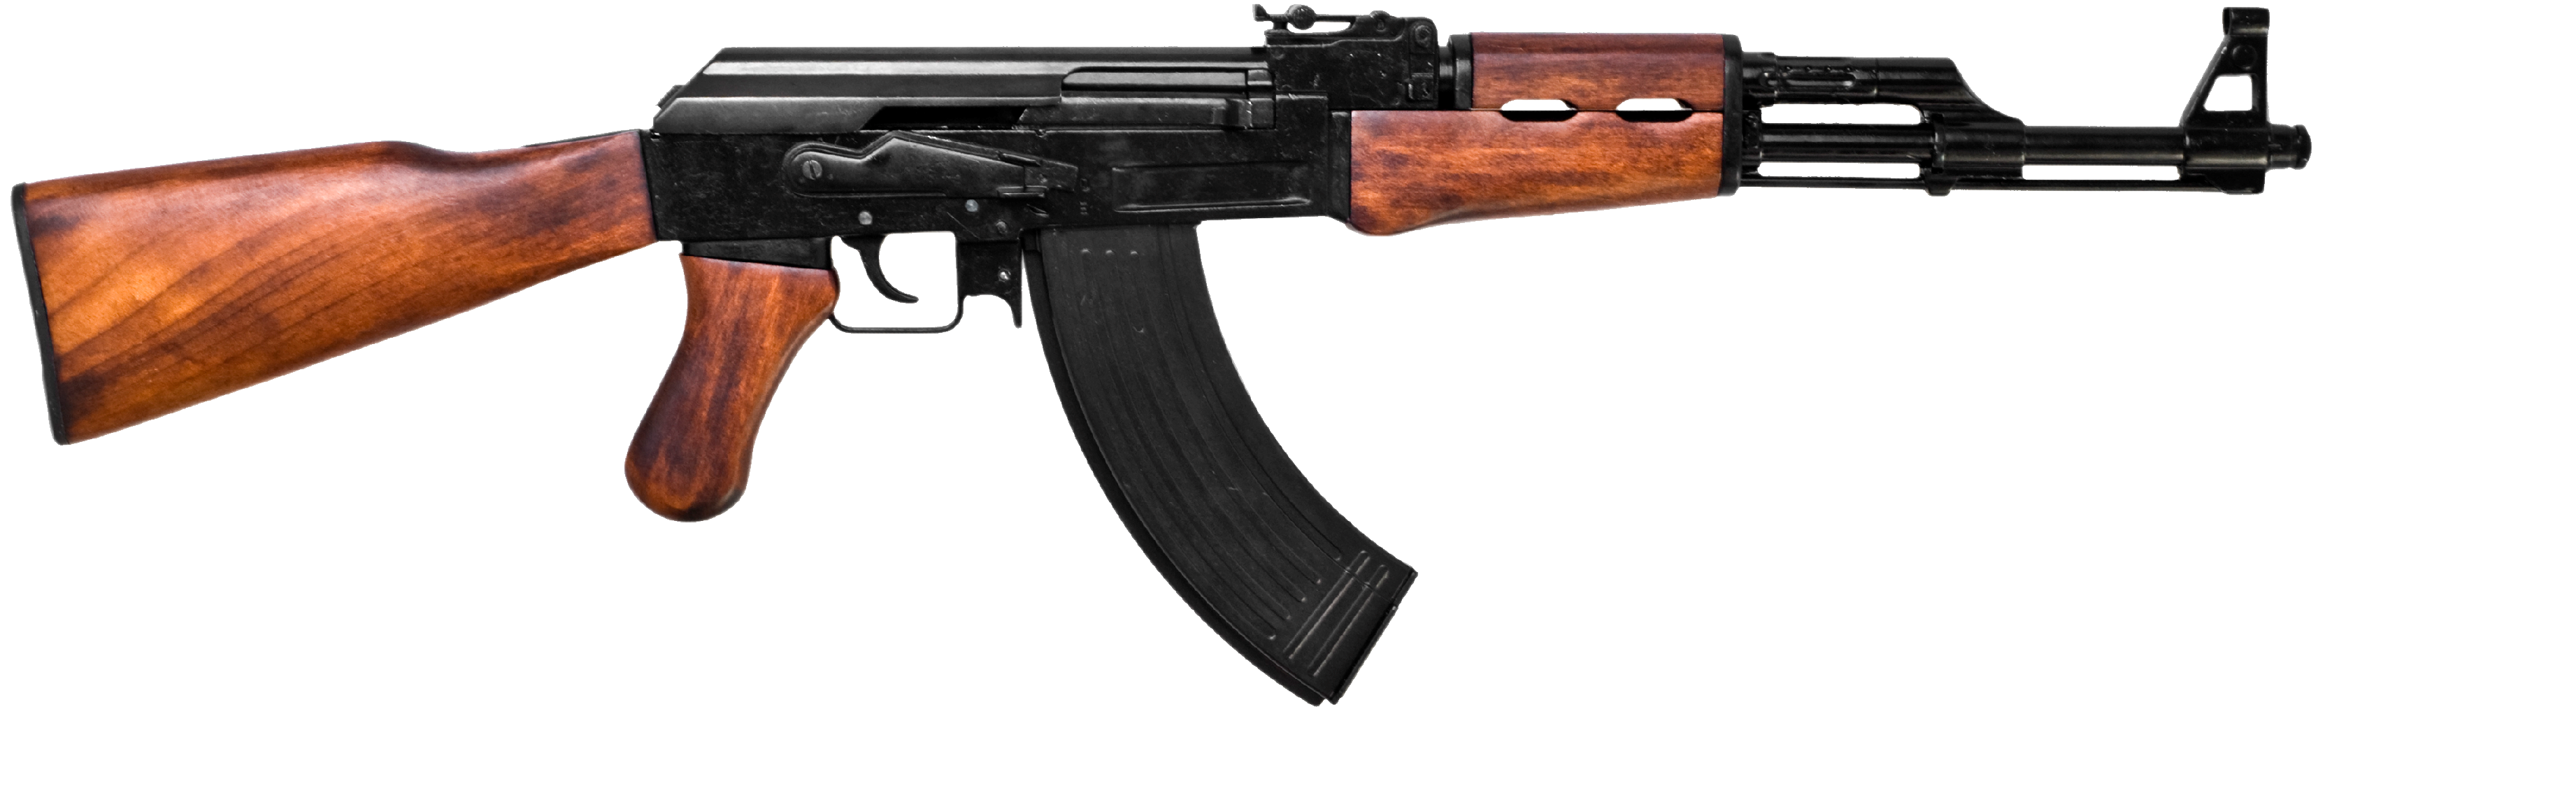 AK-47, Kałasz, rosyjski karabin szturmowy